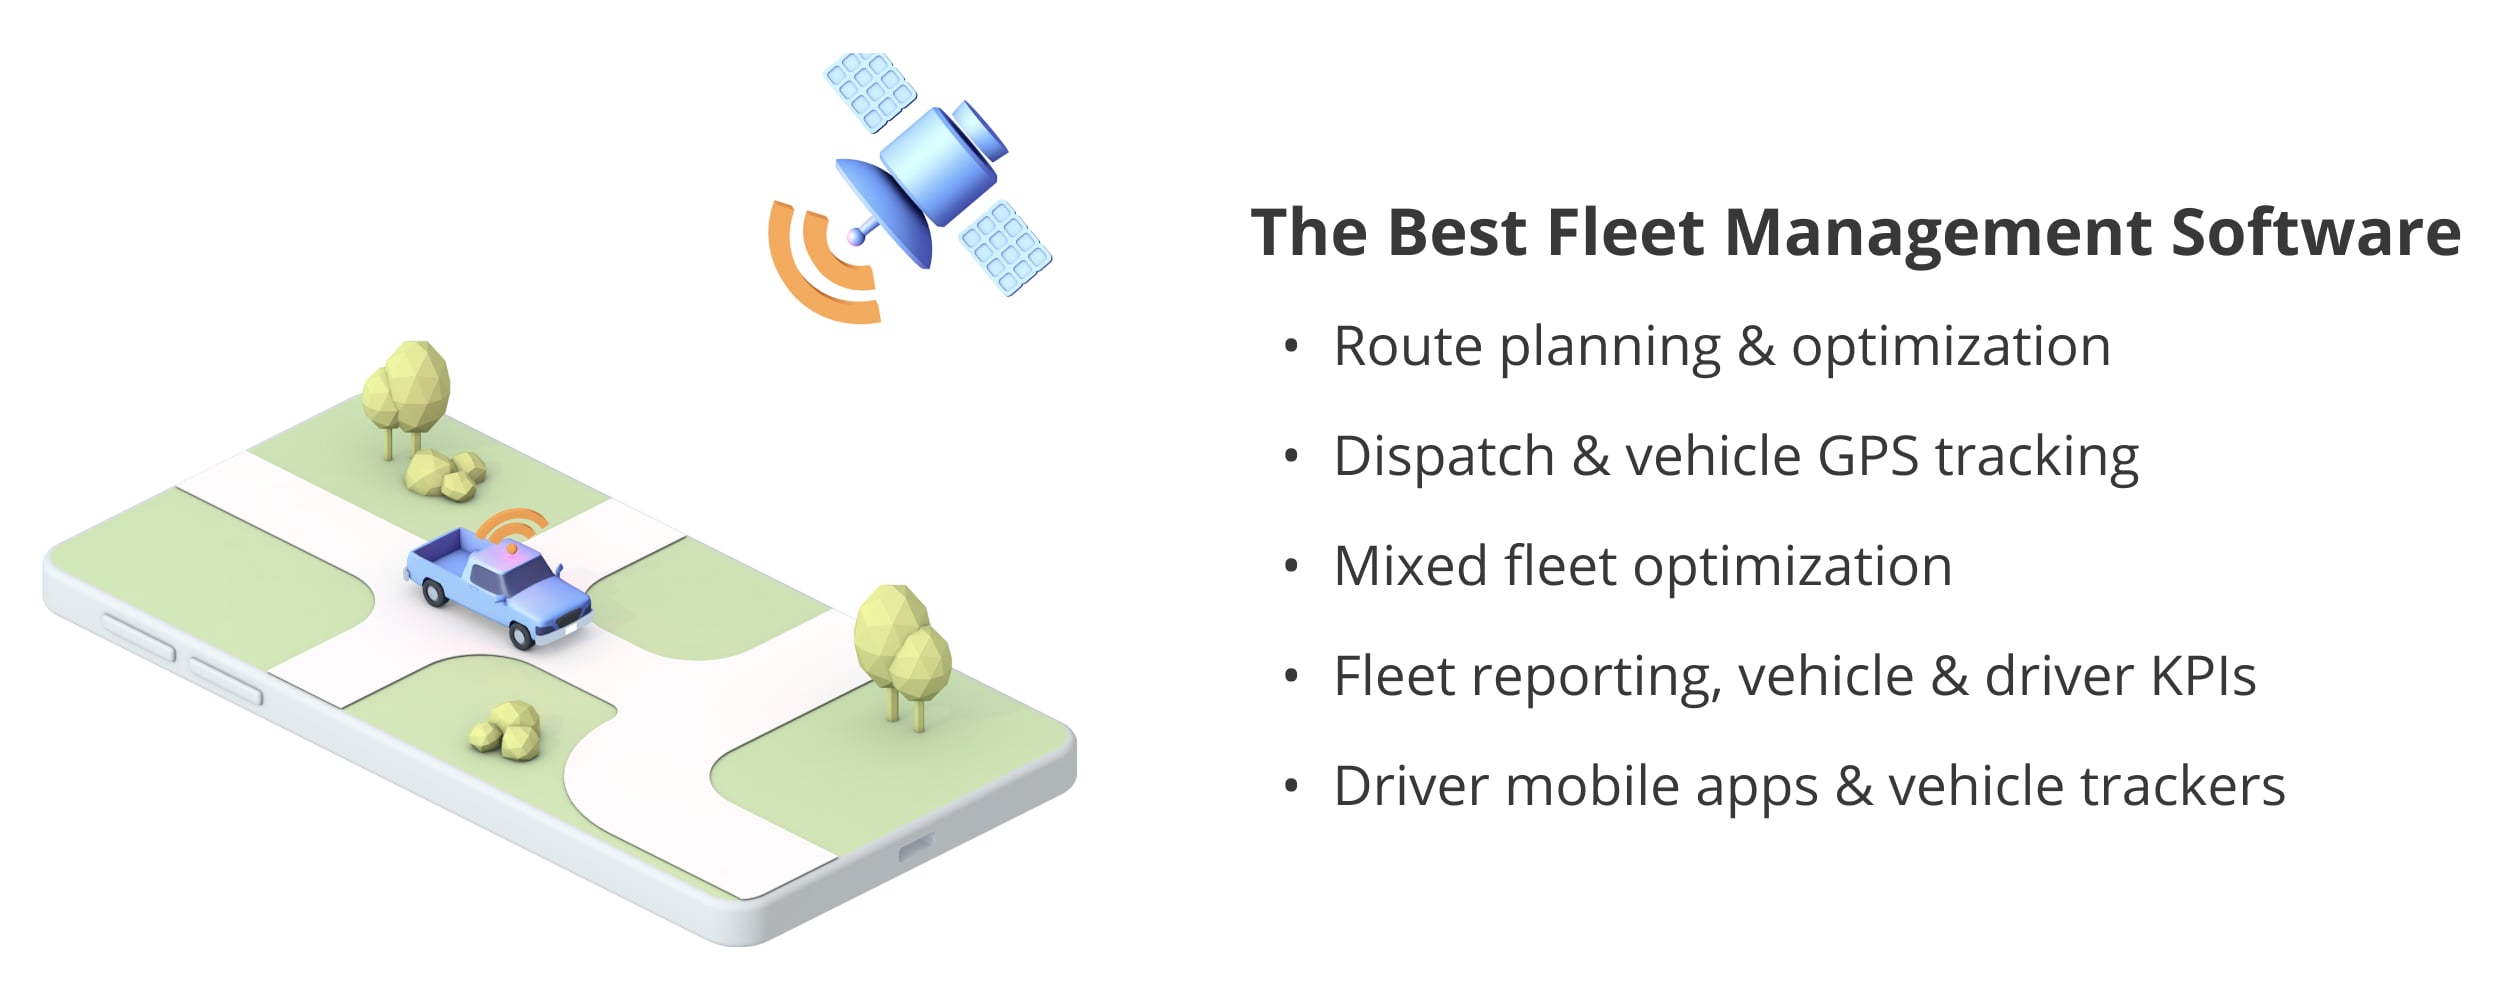 The best fleet management software for different logistics needs and fleet sizes.